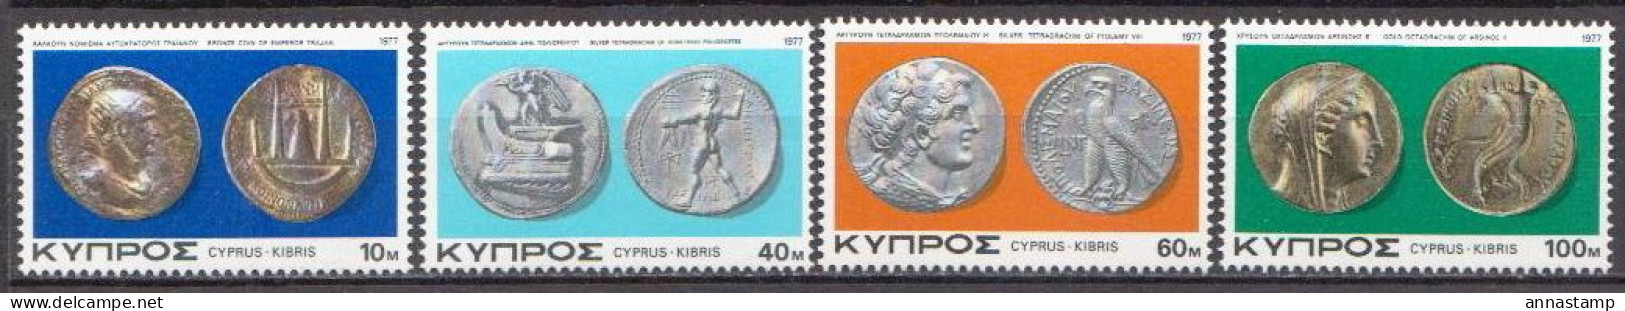 Cyprus MNH Set - Monedas